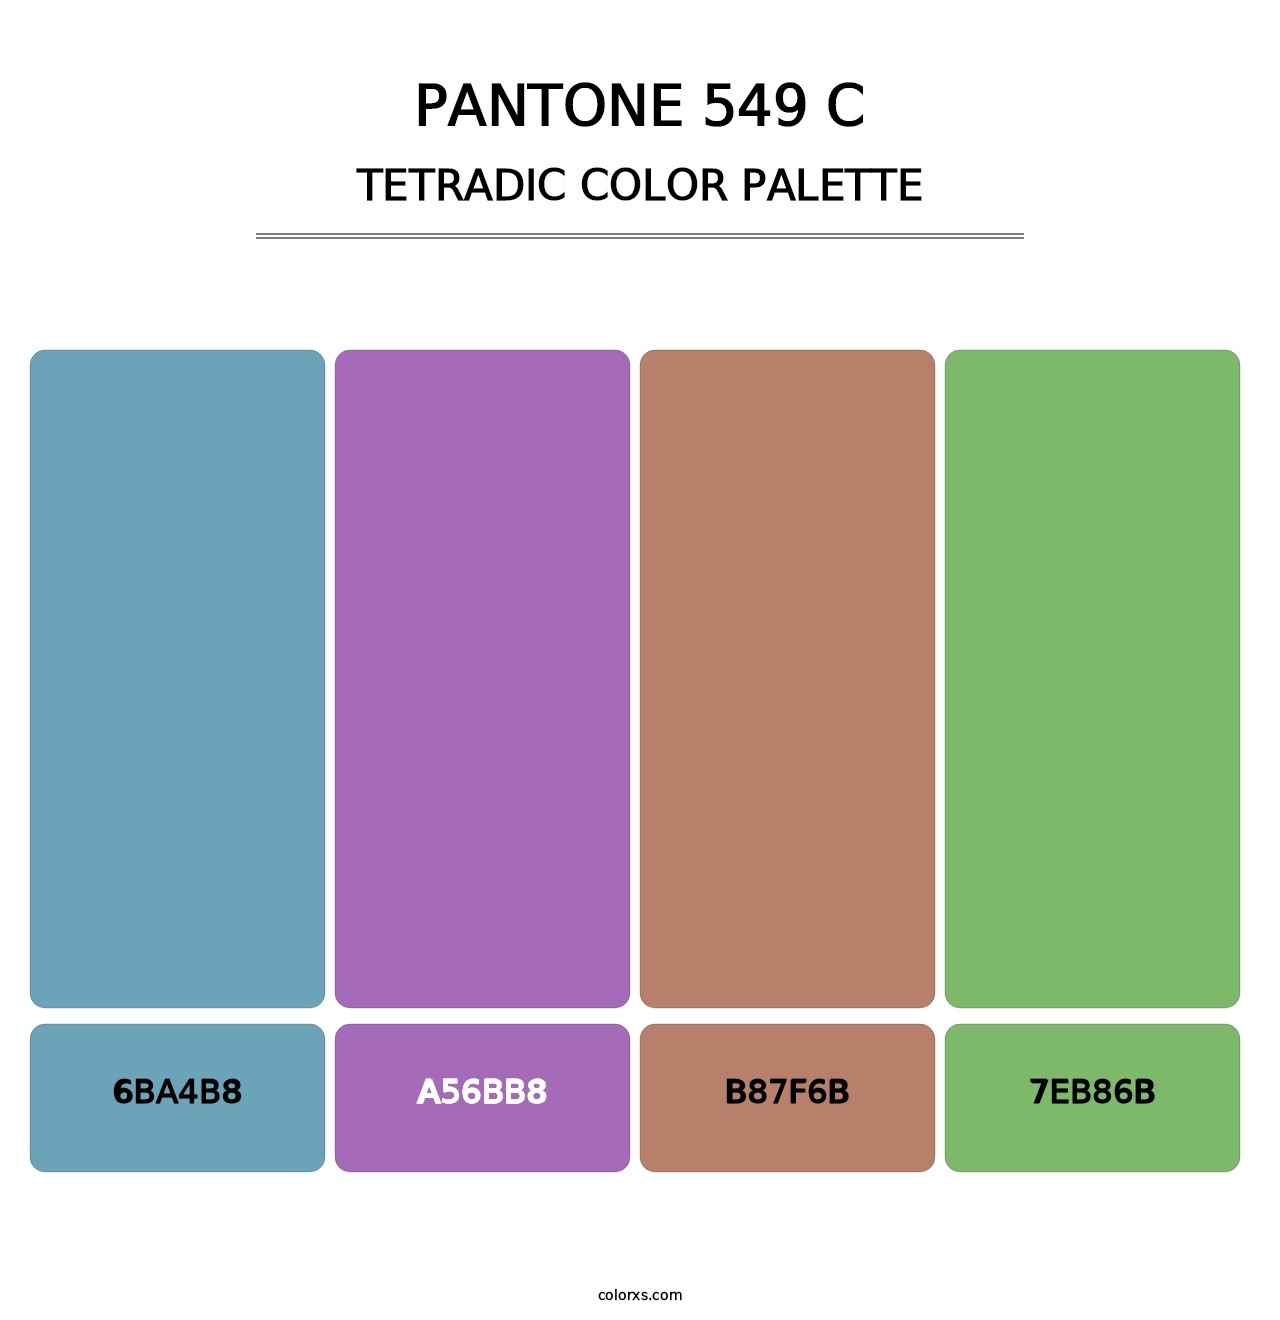 PANTONE 549 C - Tetradic Color Palette